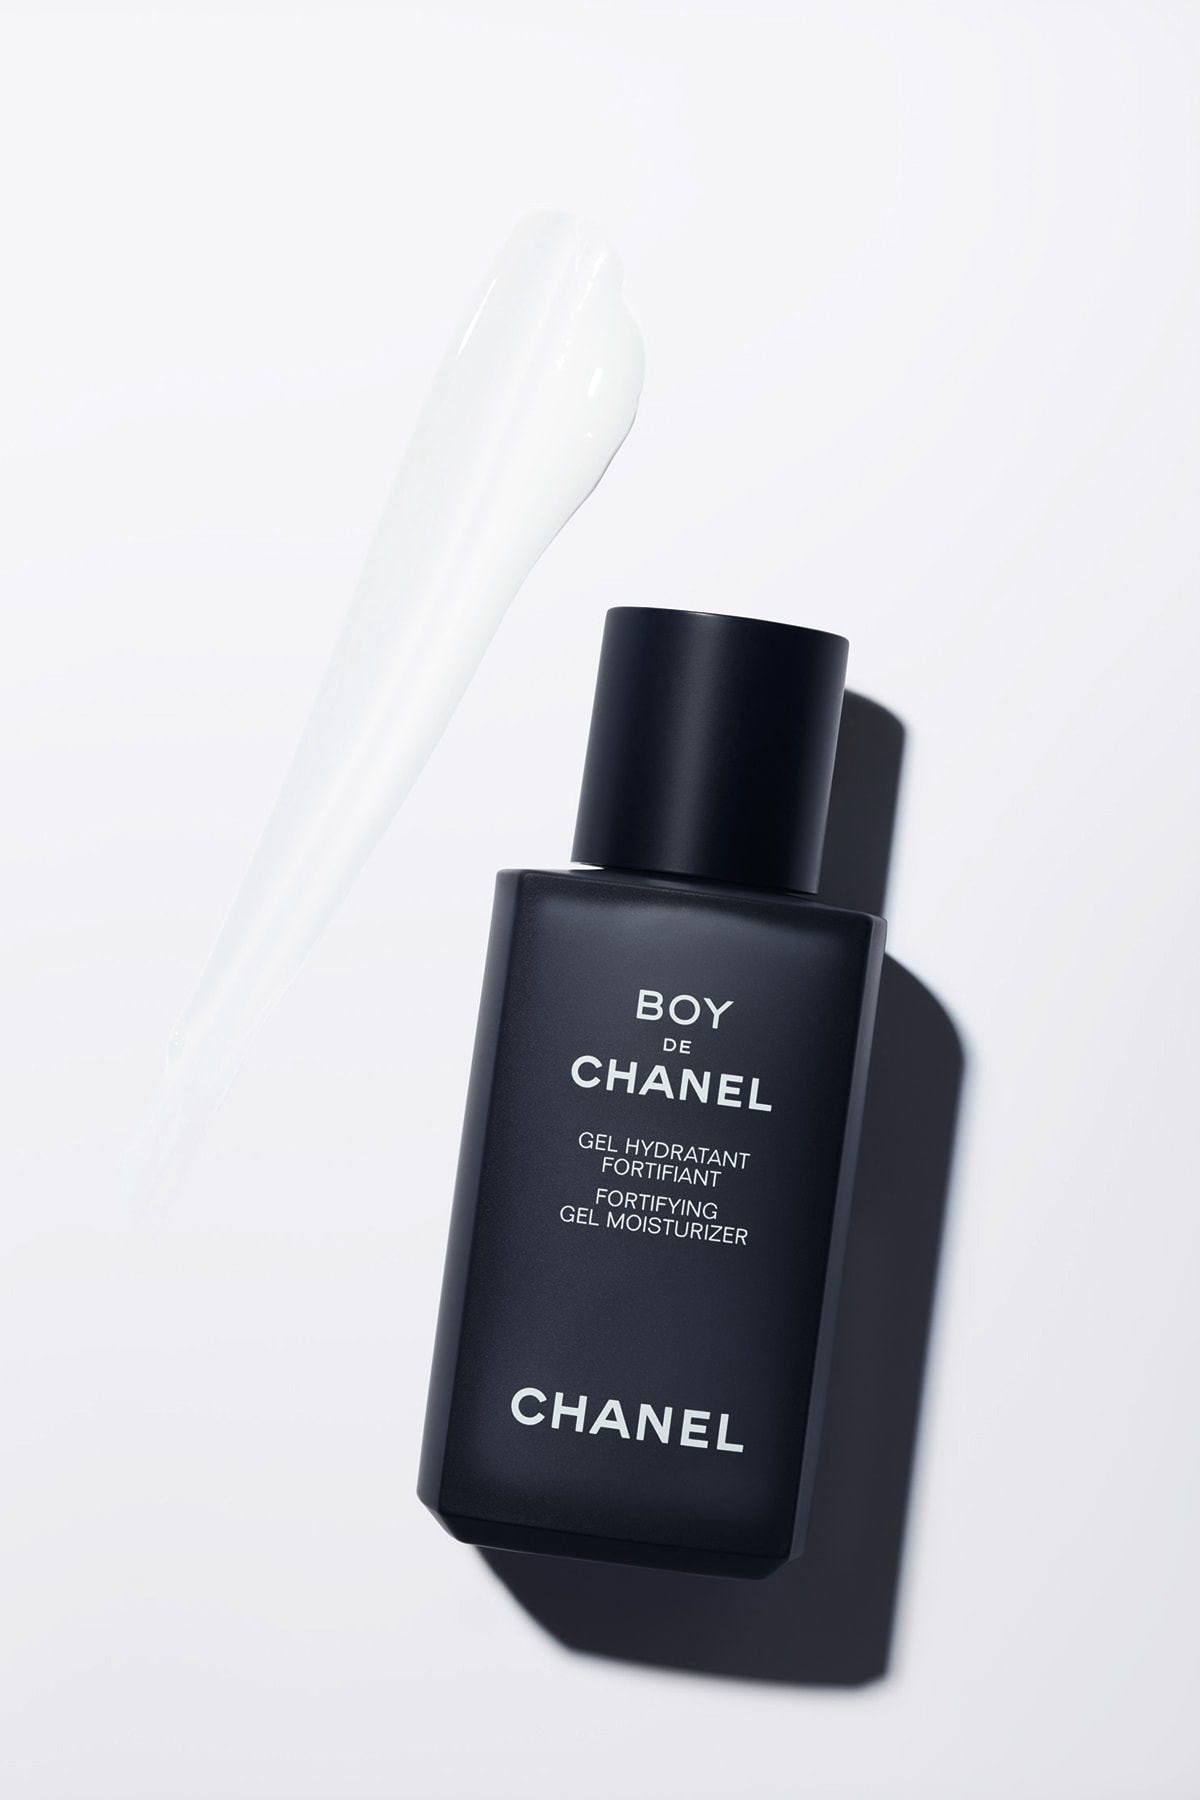 Chanel expands its Boy de Chanel make-up line 